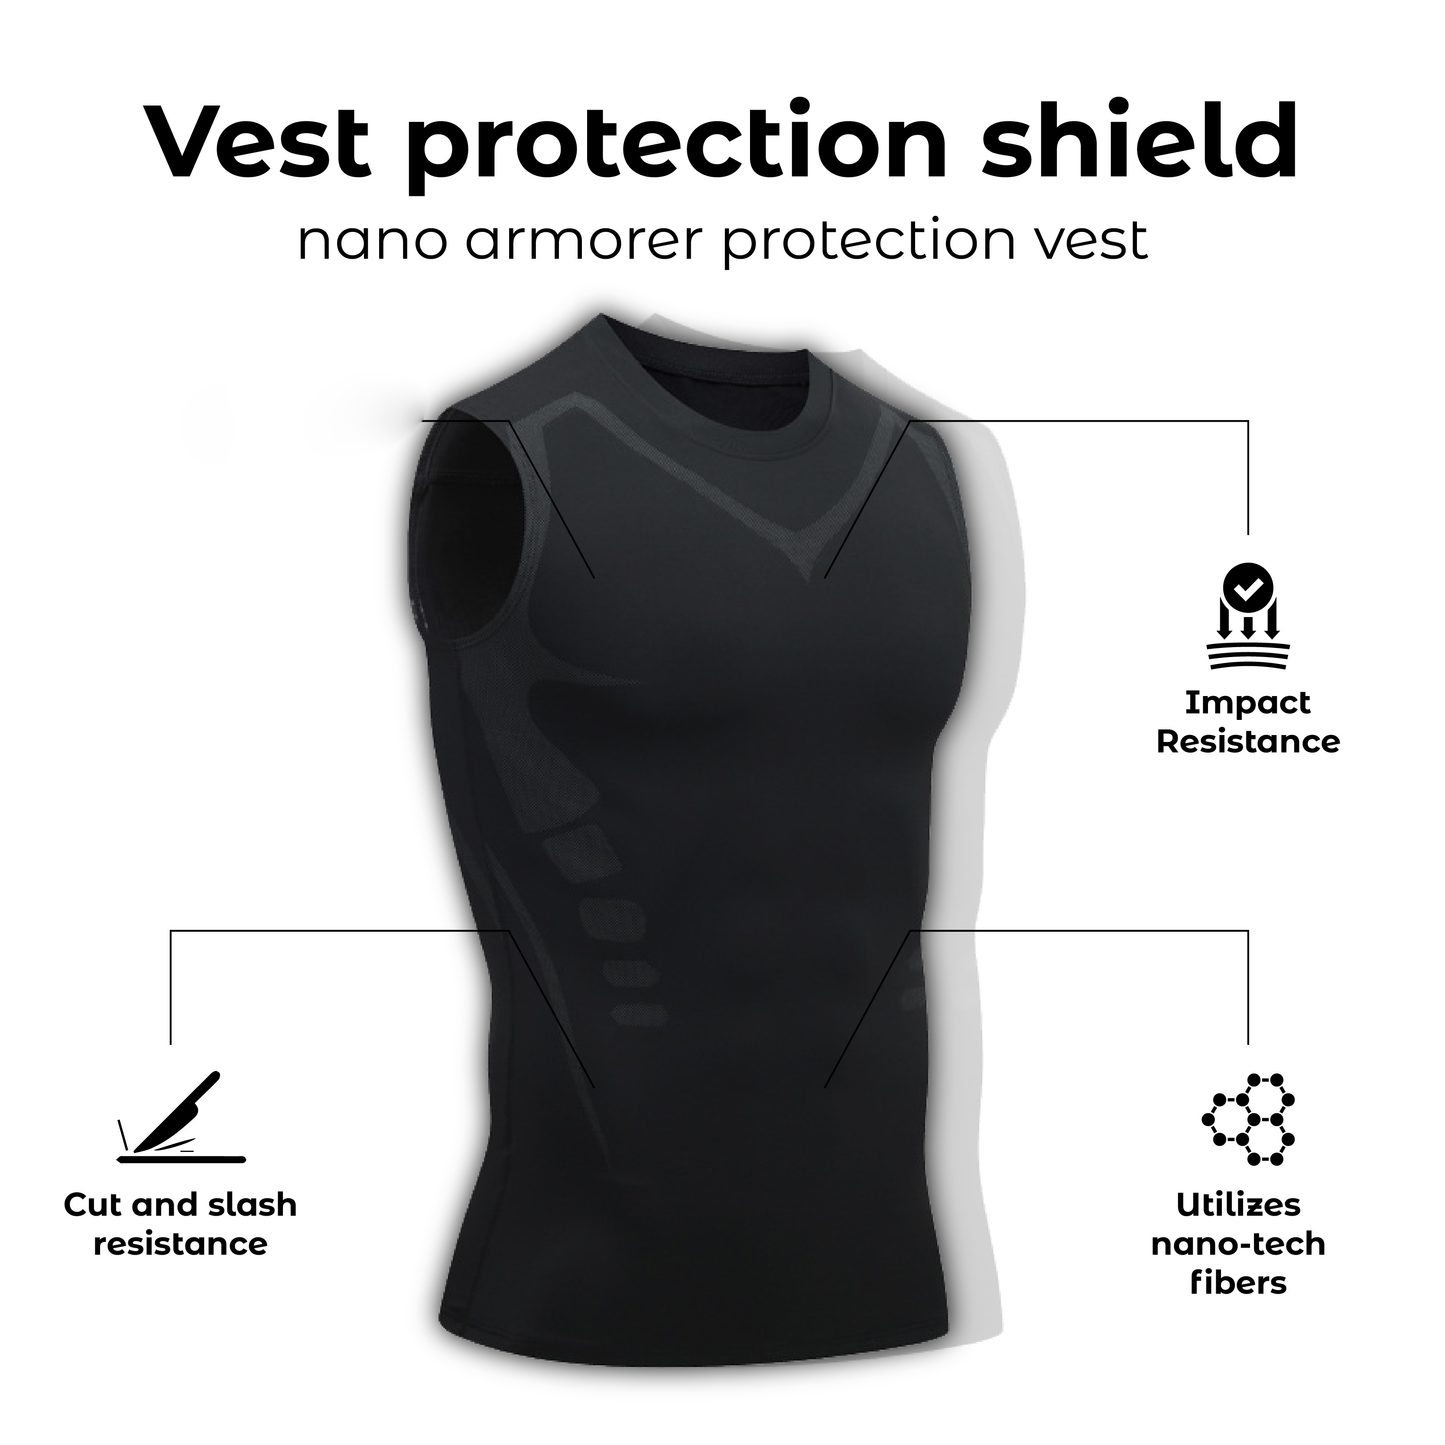 RICPIND 2 Nano Protect Armorer Guardian Vest